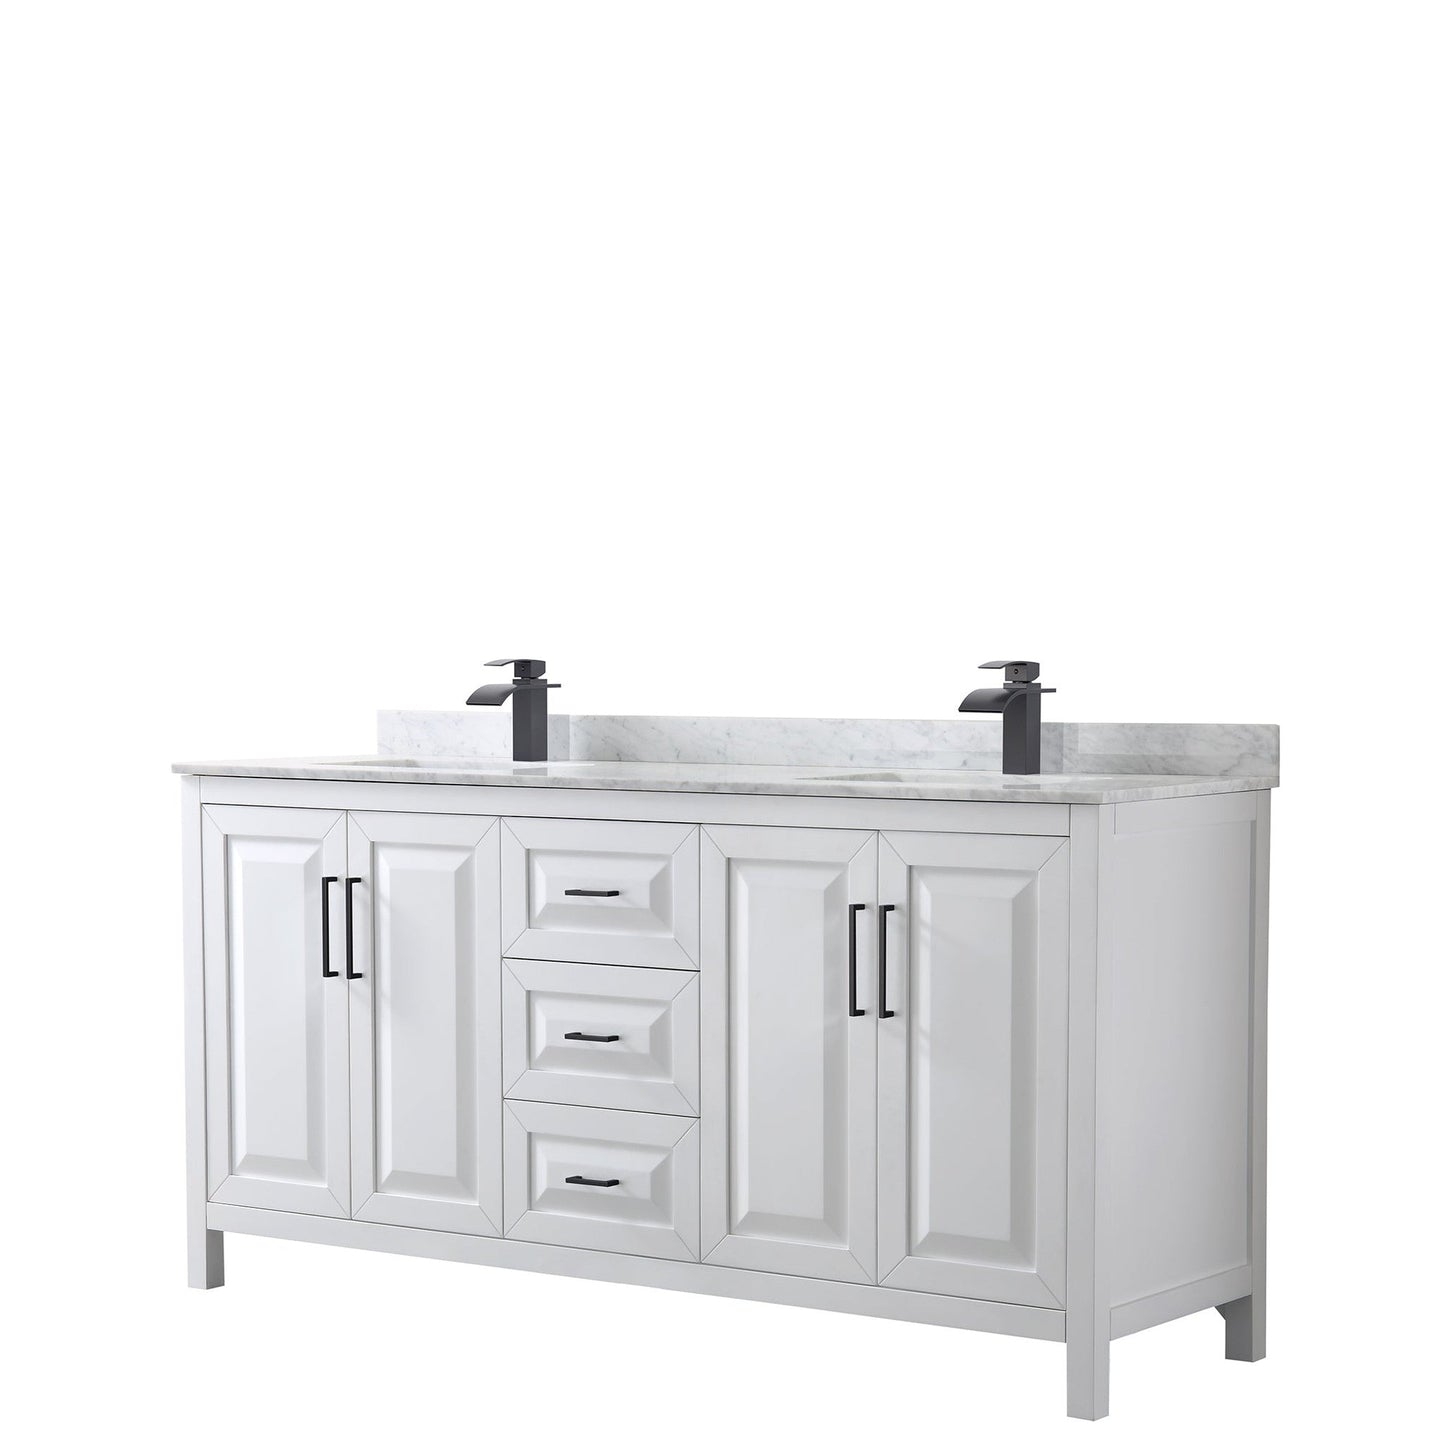 Daria 72" Double Bathroom Vanity in White, White Carrara Marble Countertop, Undermount Square Sinks, Matte Black Trim